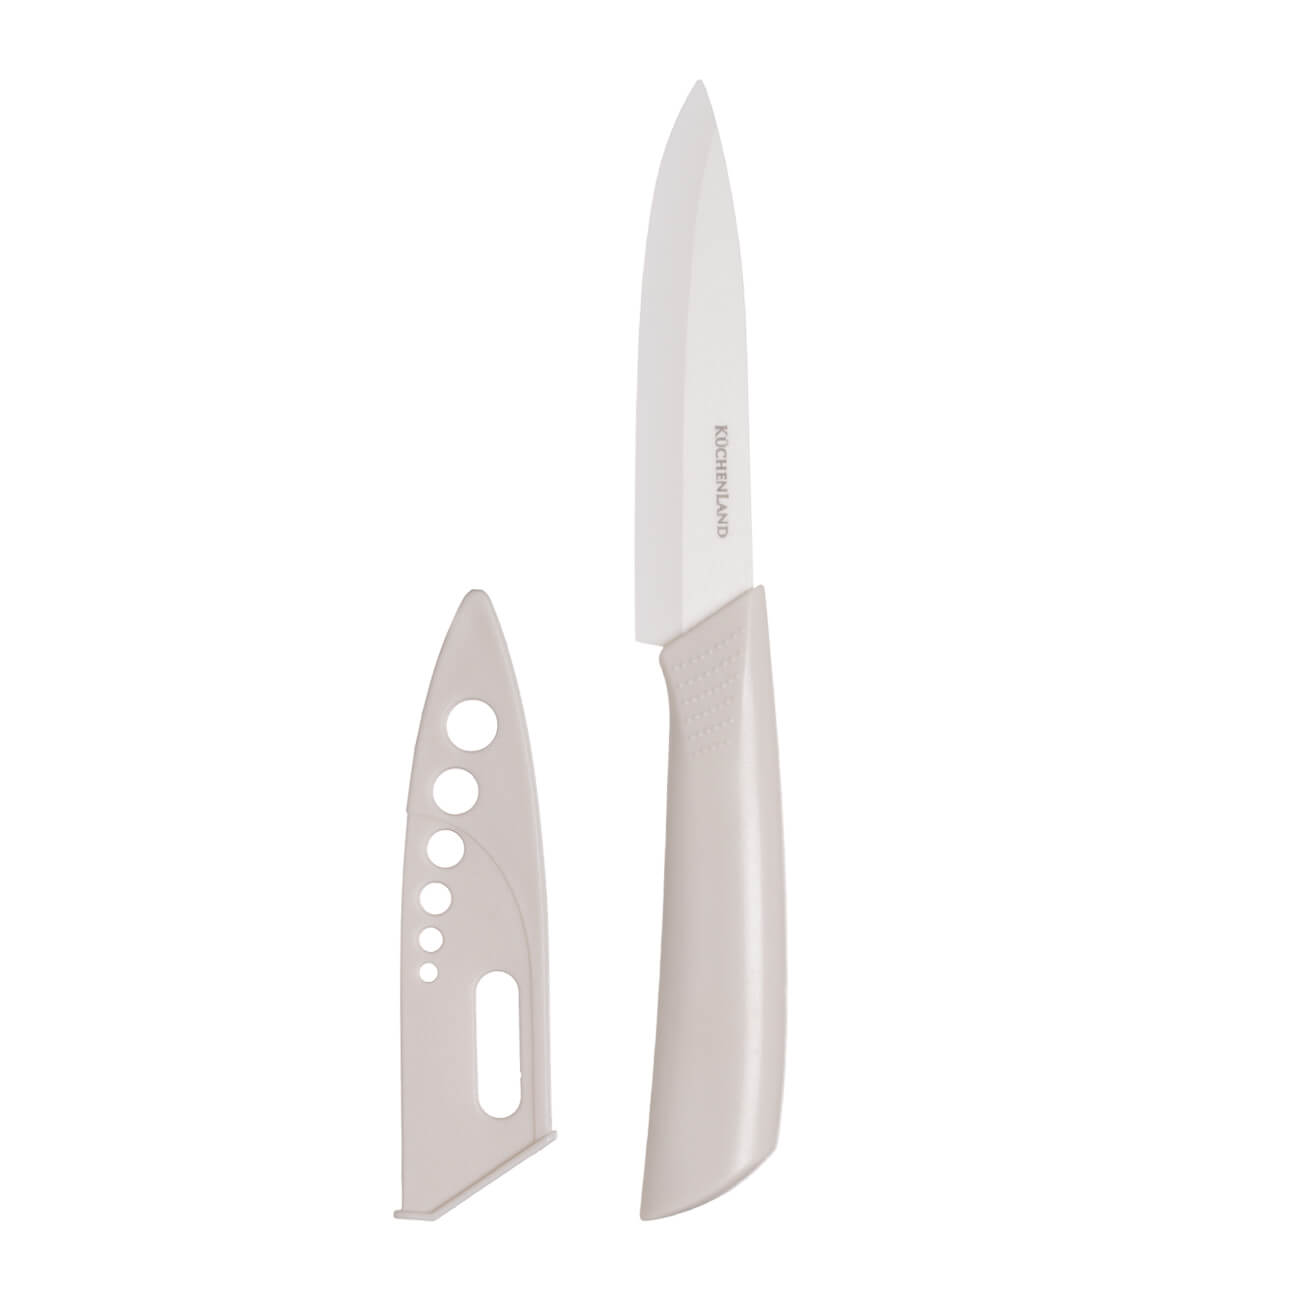 Нож для нарезки, 13 см, с чехлом, керамика/пластик, молочный, Regular